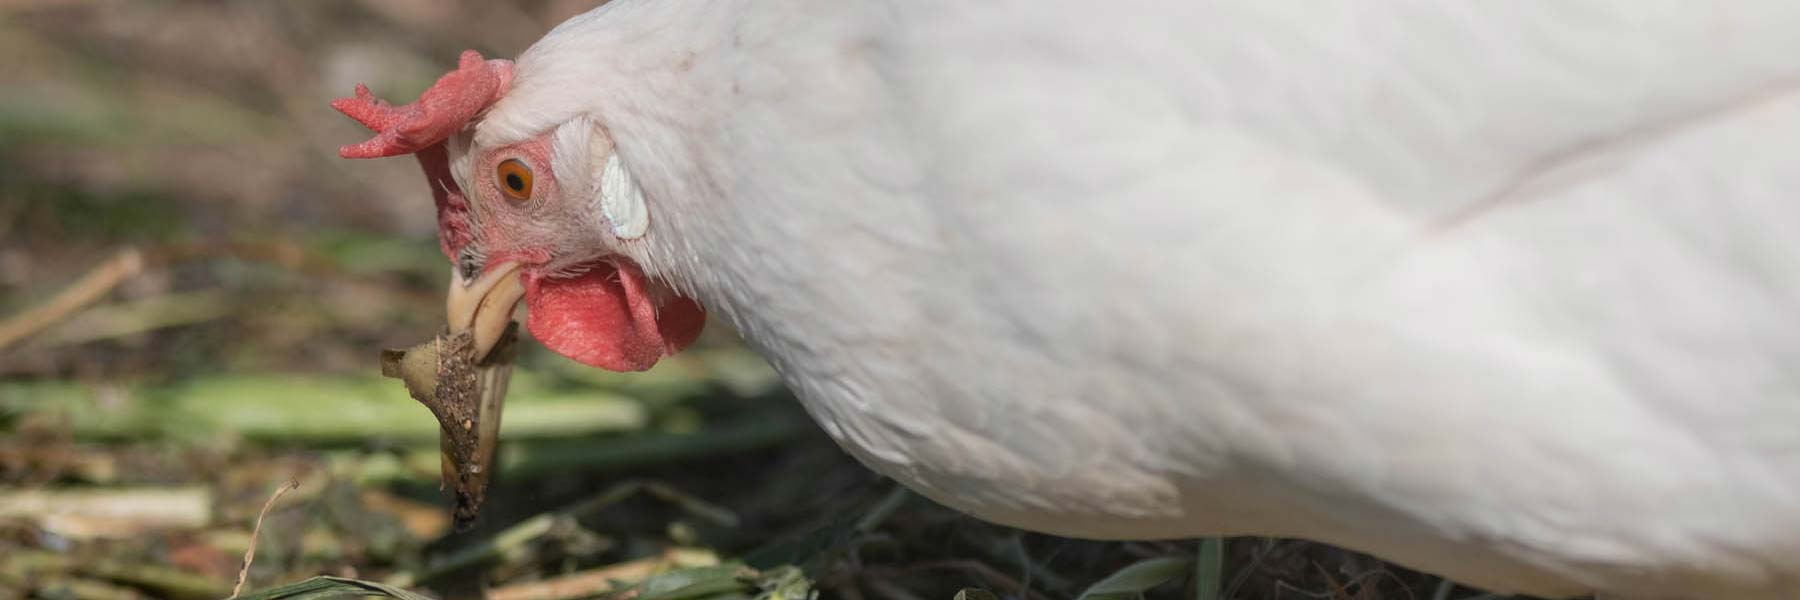 Leghorn hens eggs without antibiotics